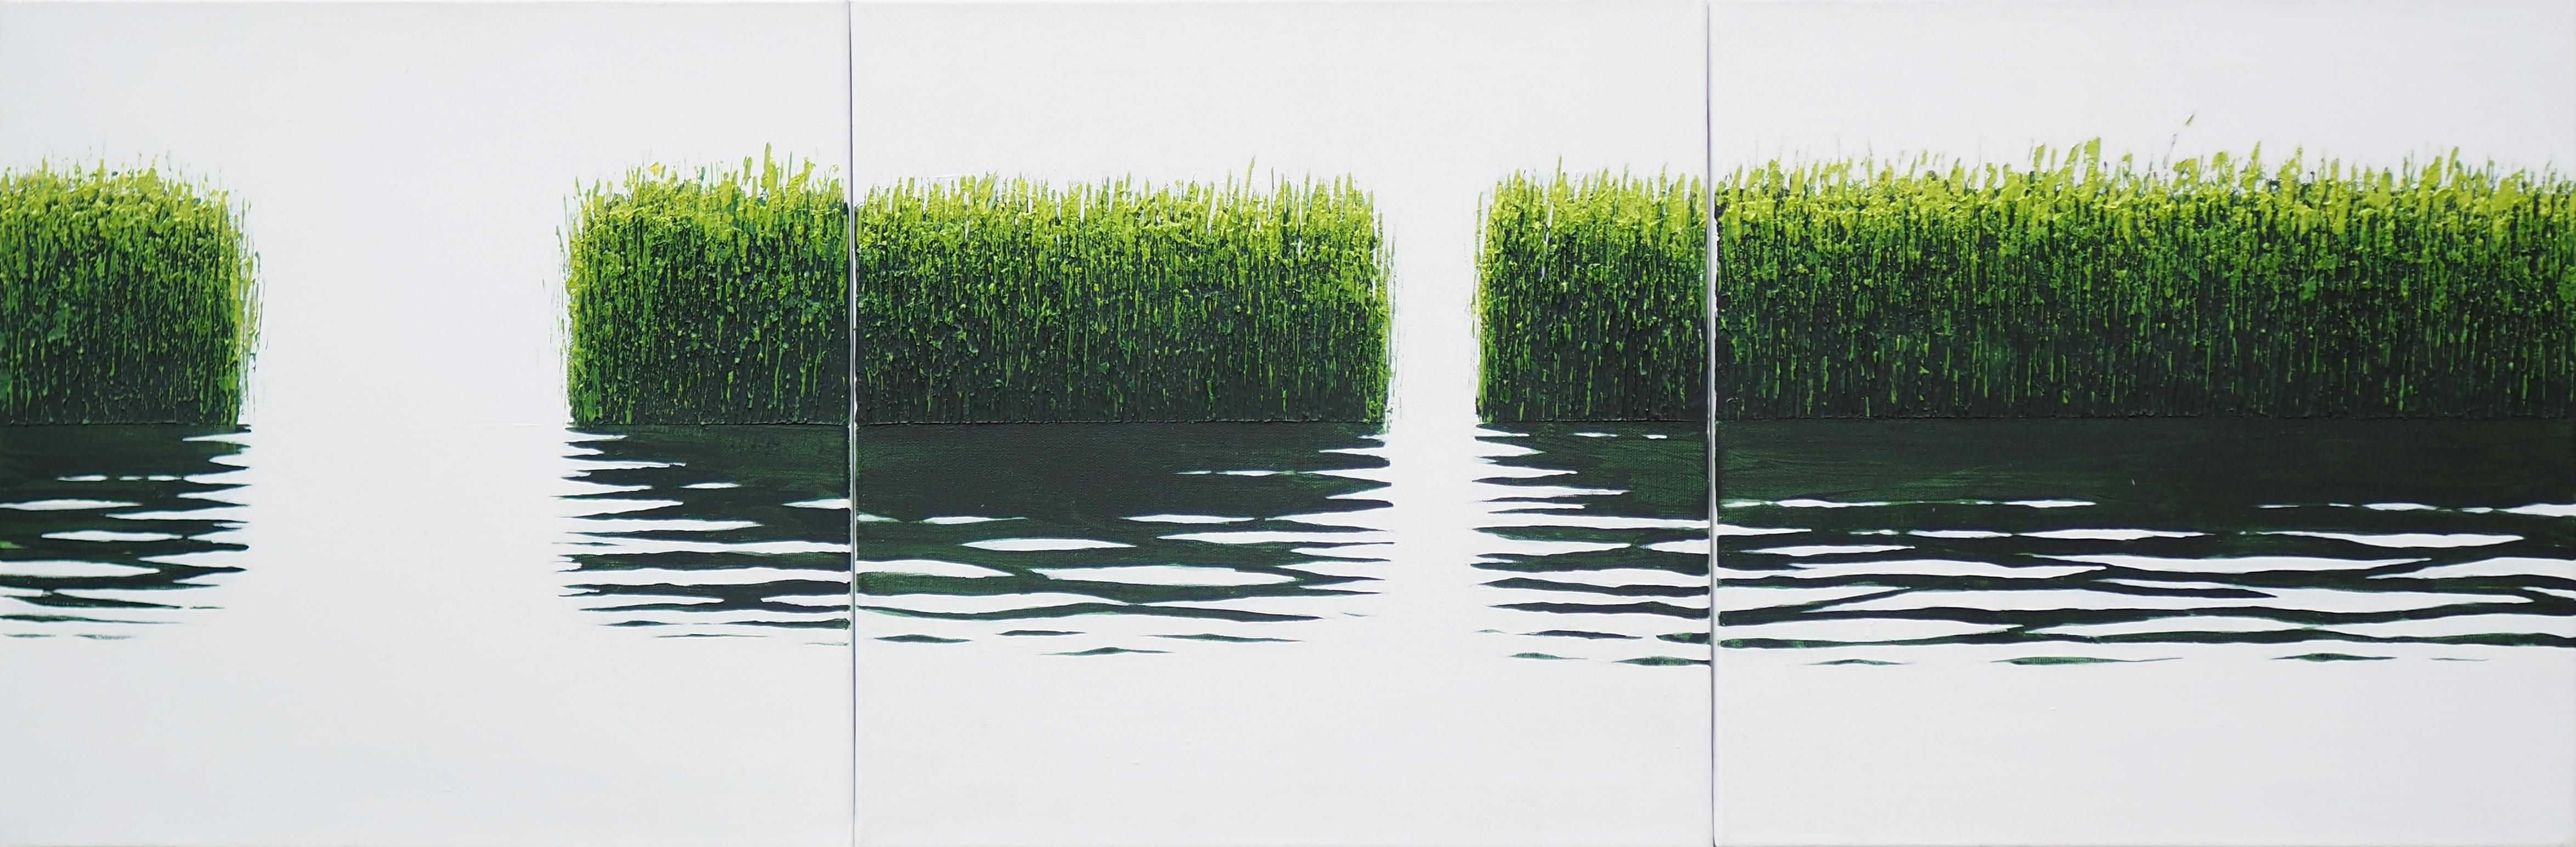 Figurative Painting Grzegorz Wójcik - GRASSES V Triptyque - Paysage atmosphérique, peinture moderne de paysage marin. 